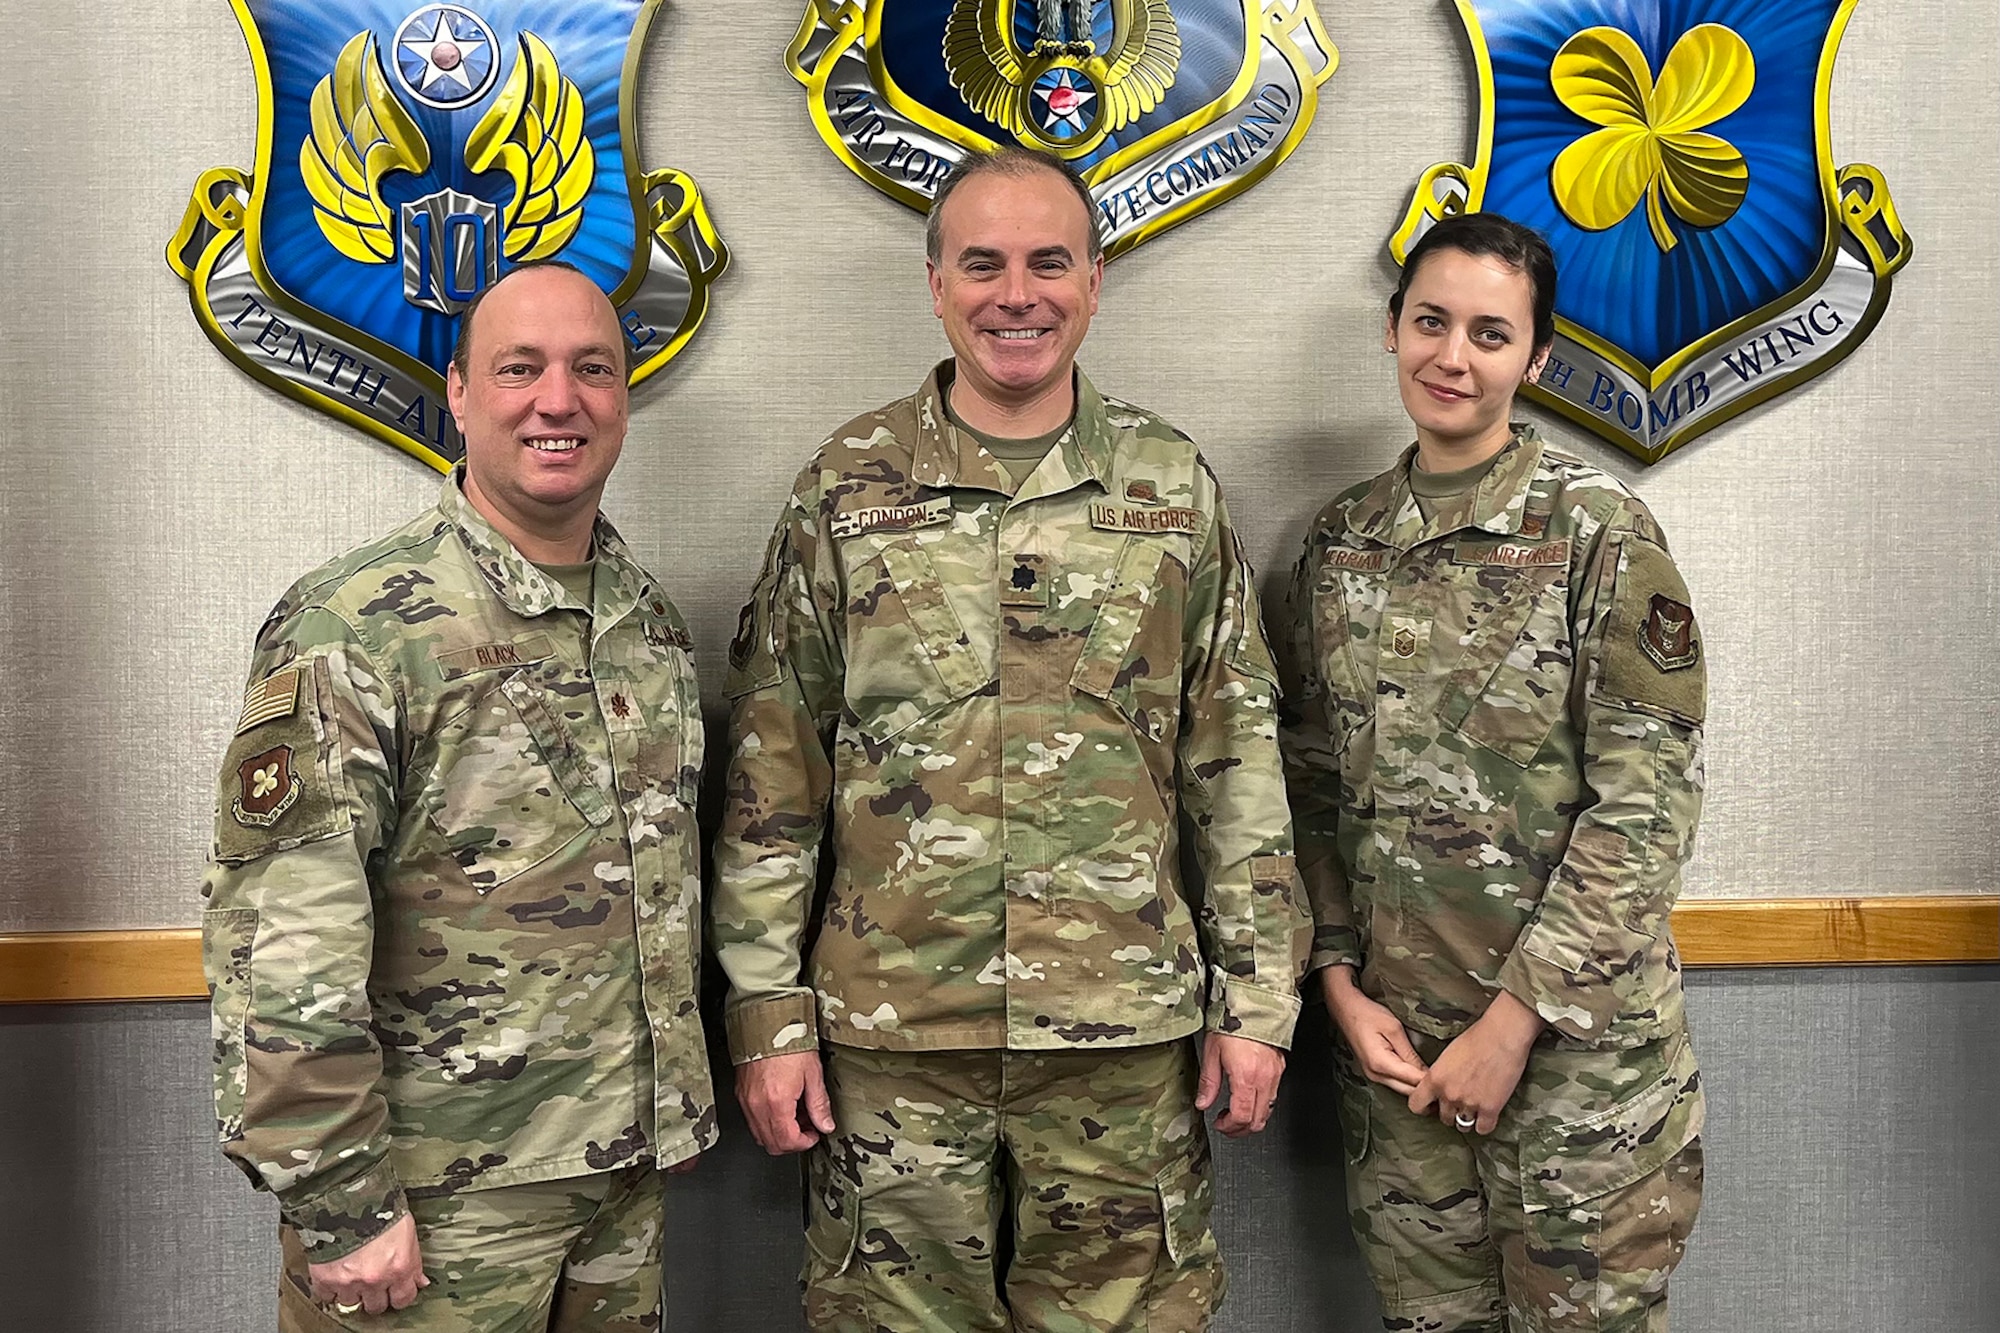 Three smiling Airmen pose for photo